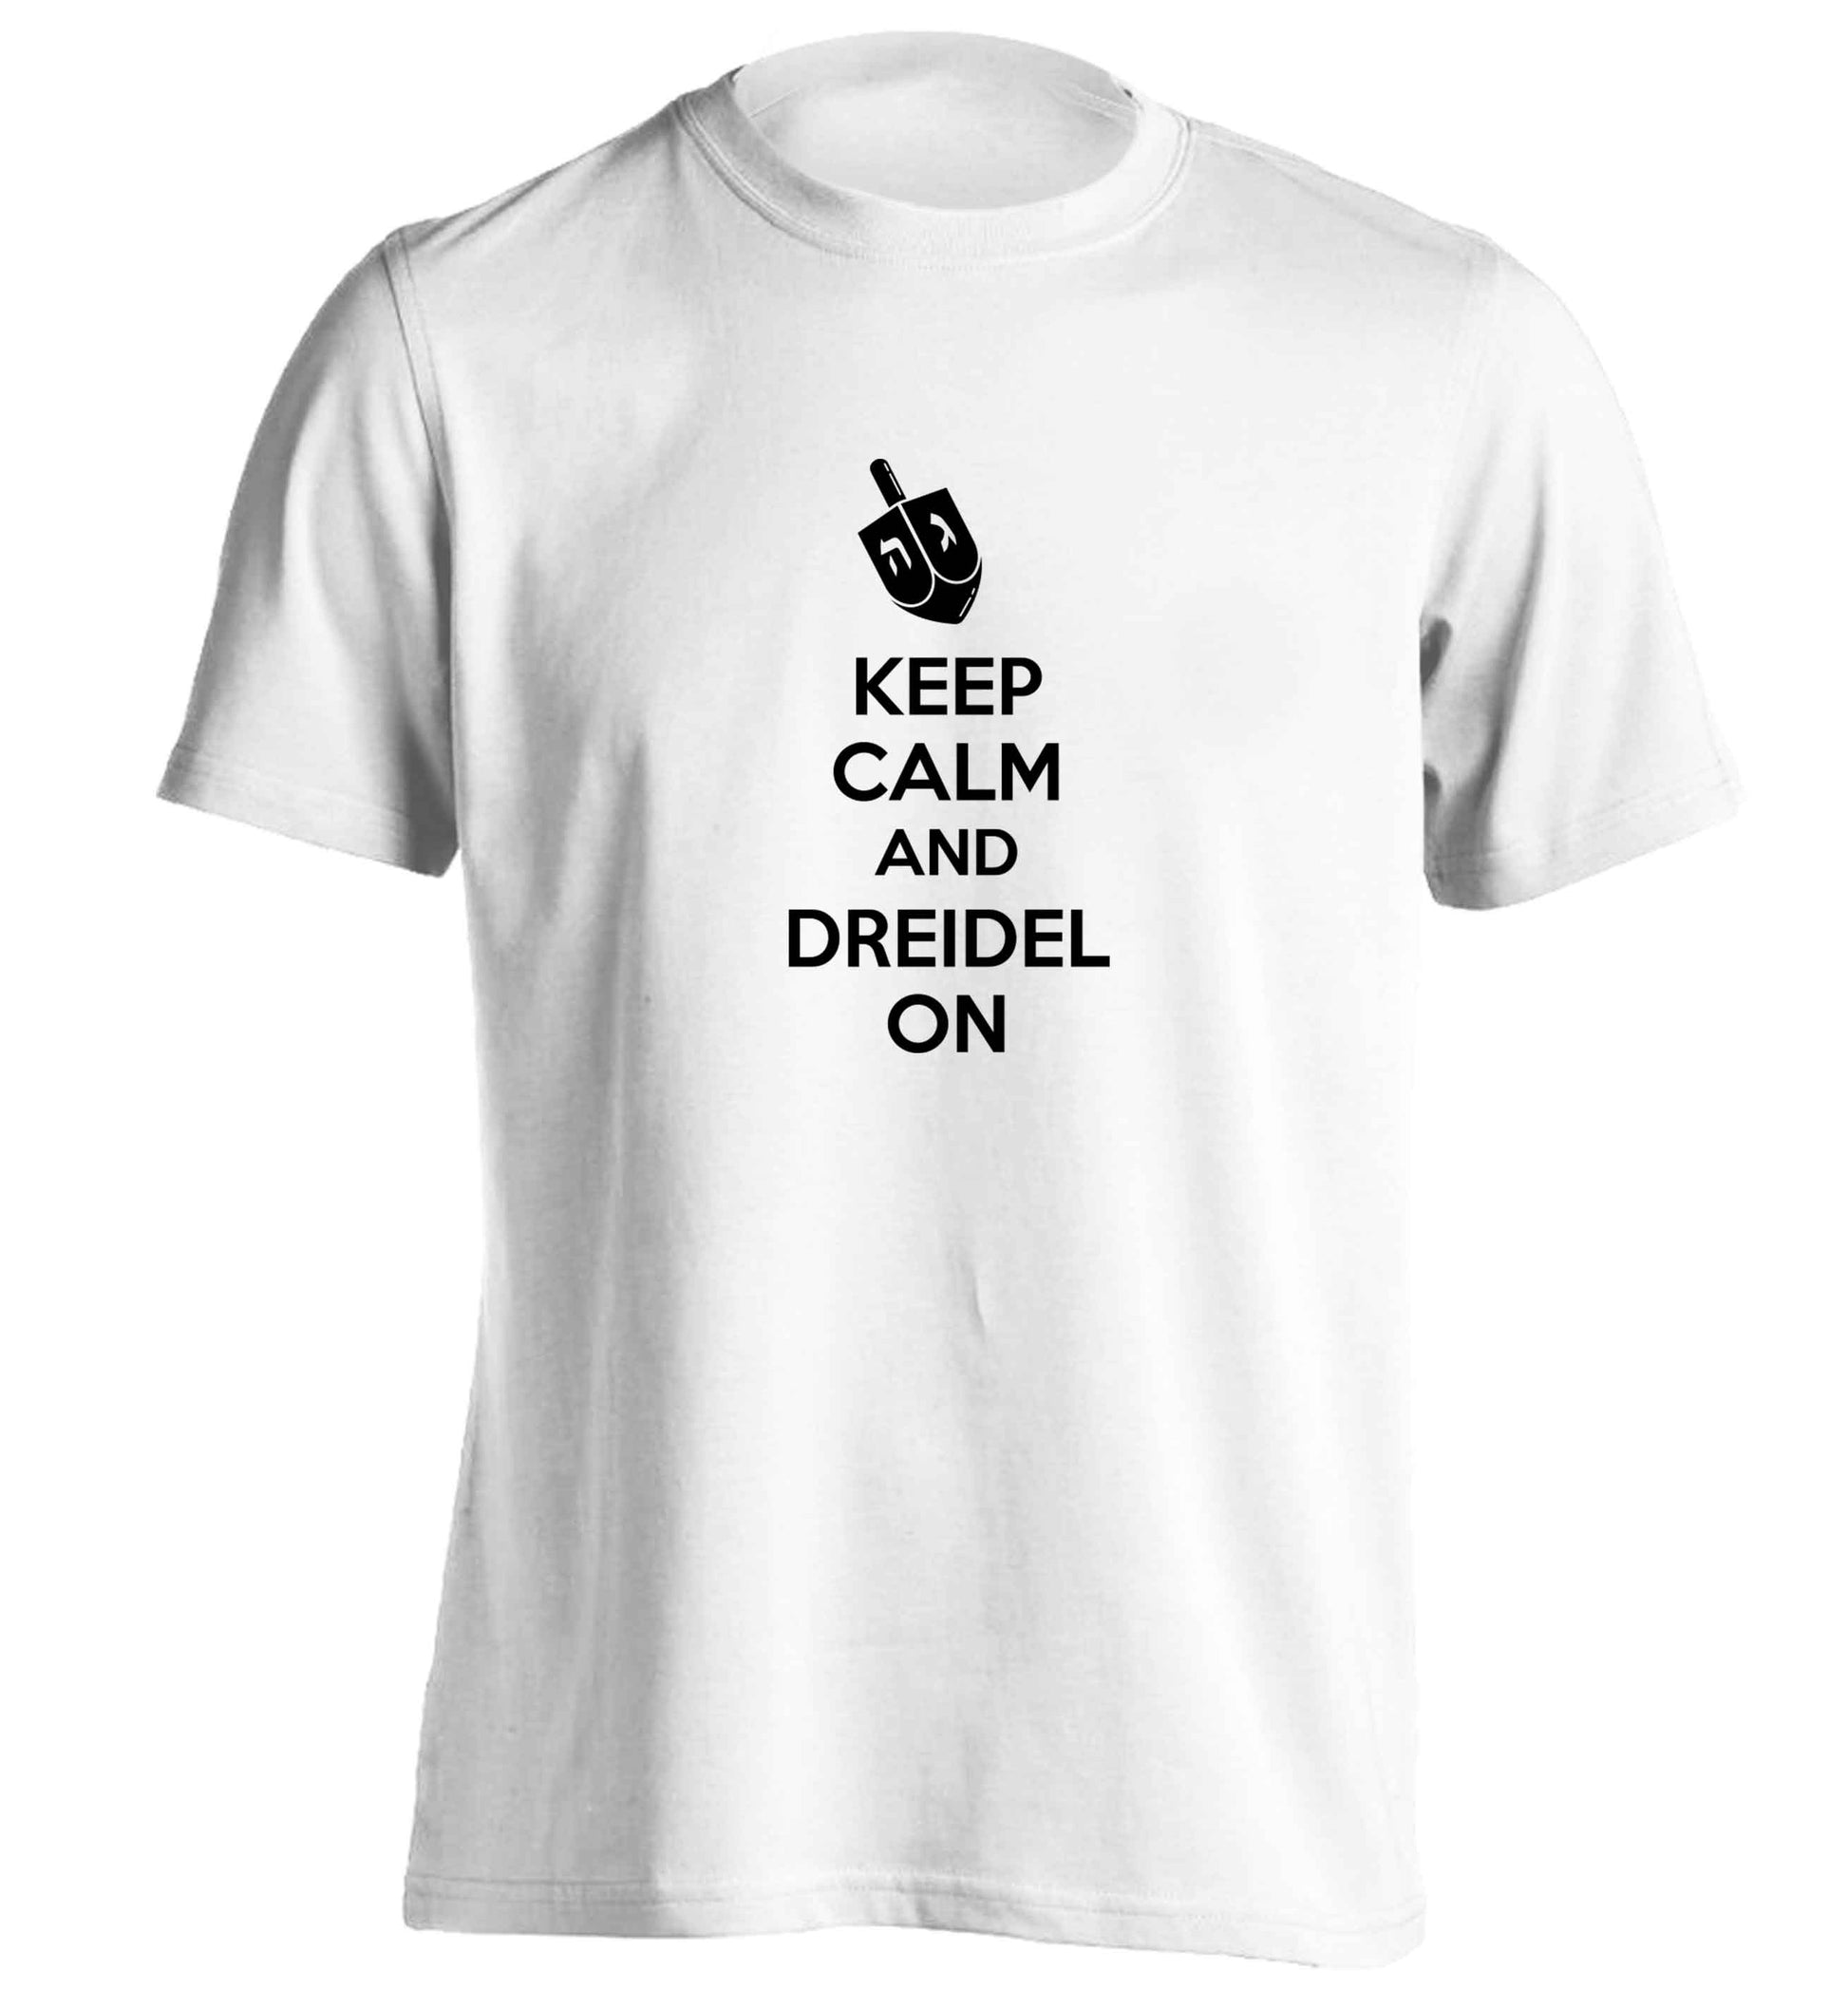 Keep calm and dreidel on adults unisex white Tshirt 2XL